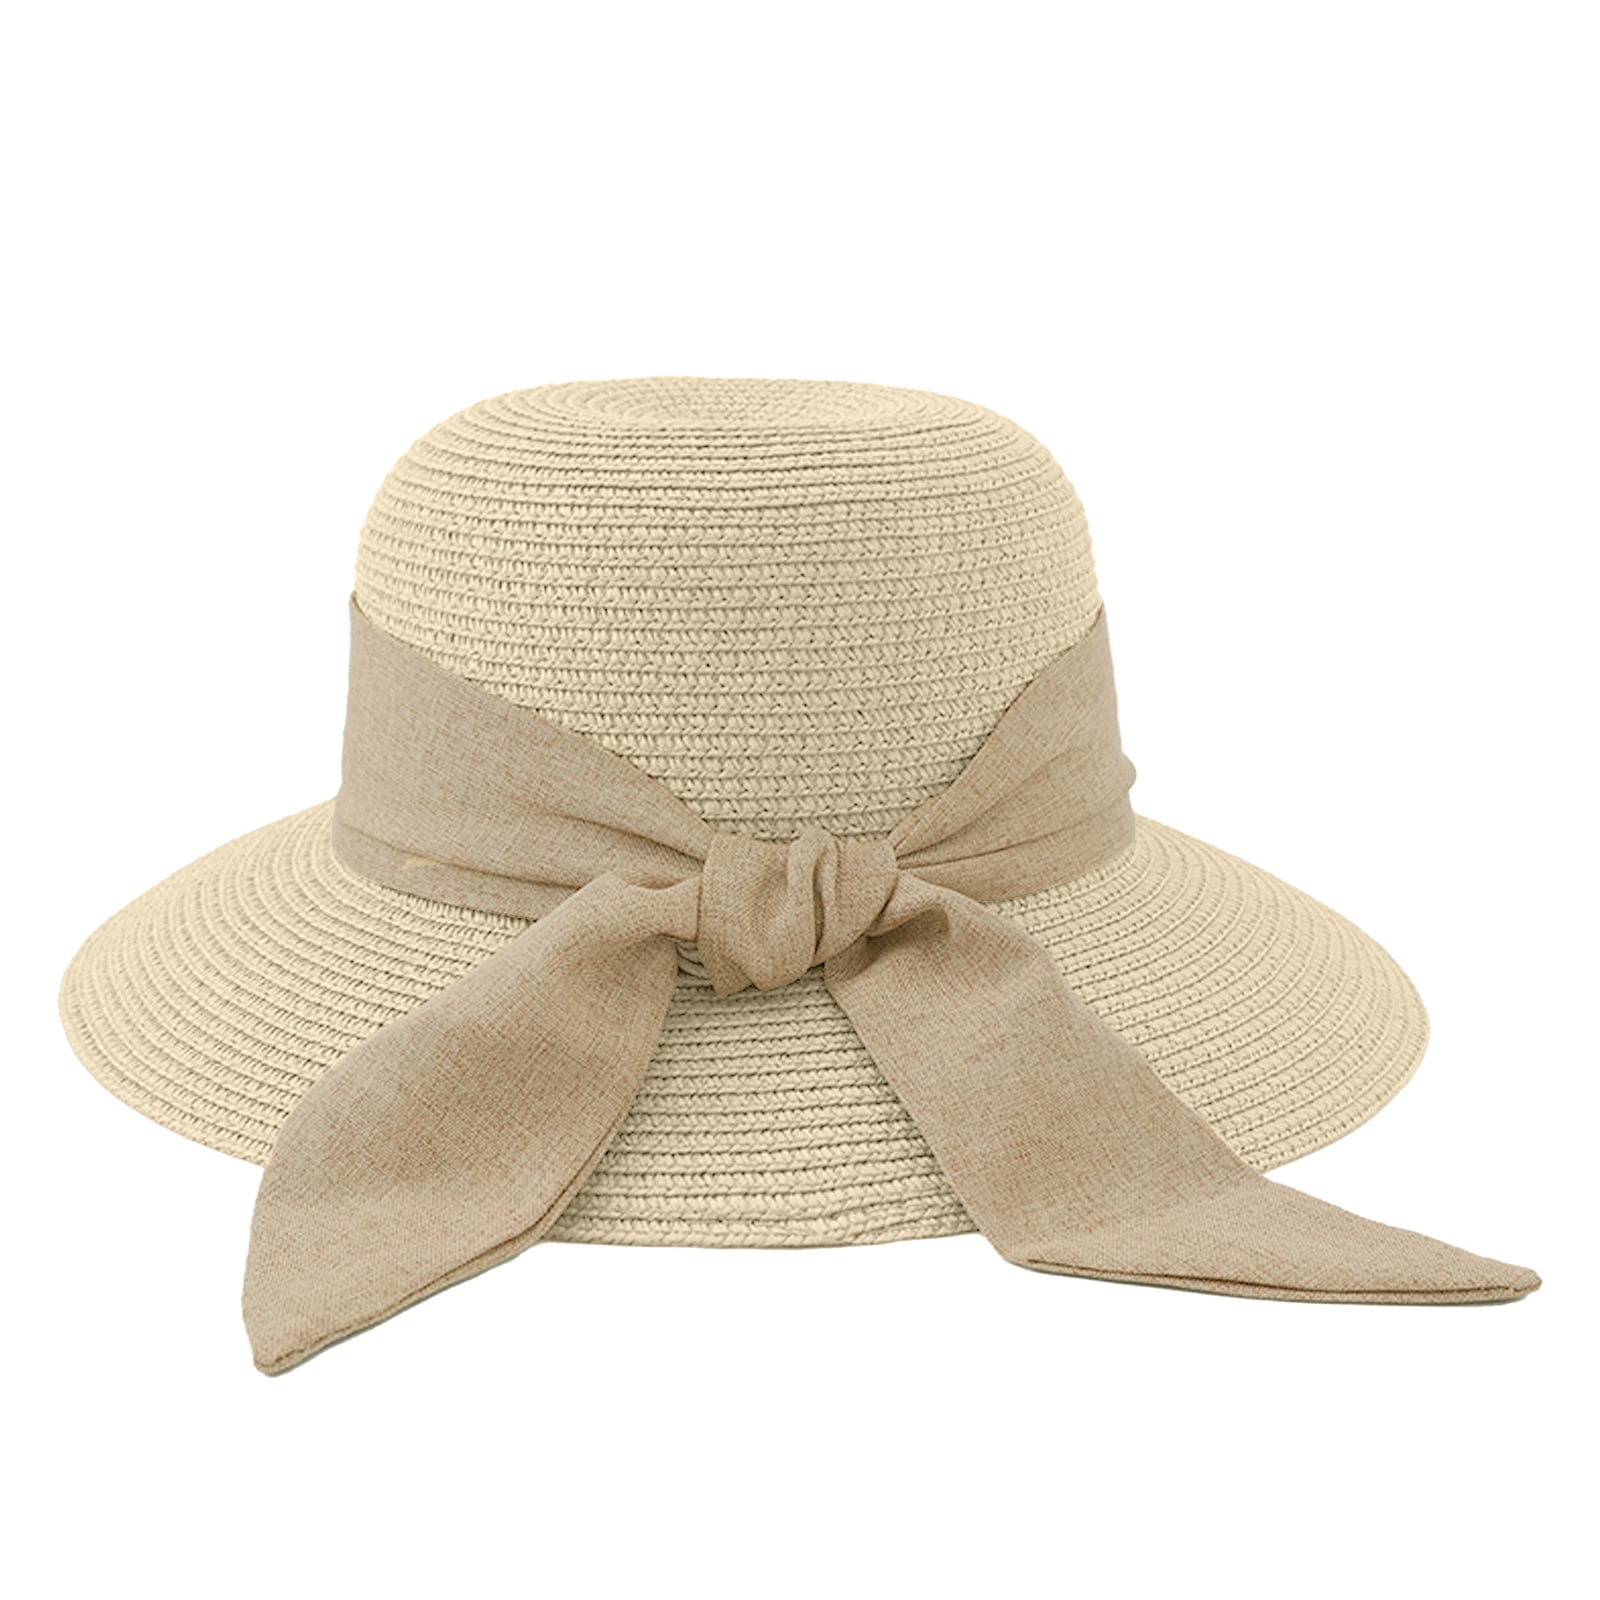 Bodychum Women's Straw Sun Hat Wide Brim Hat Beach Hat with Bow Ribbon  Sweatband Adjustable- Beige 